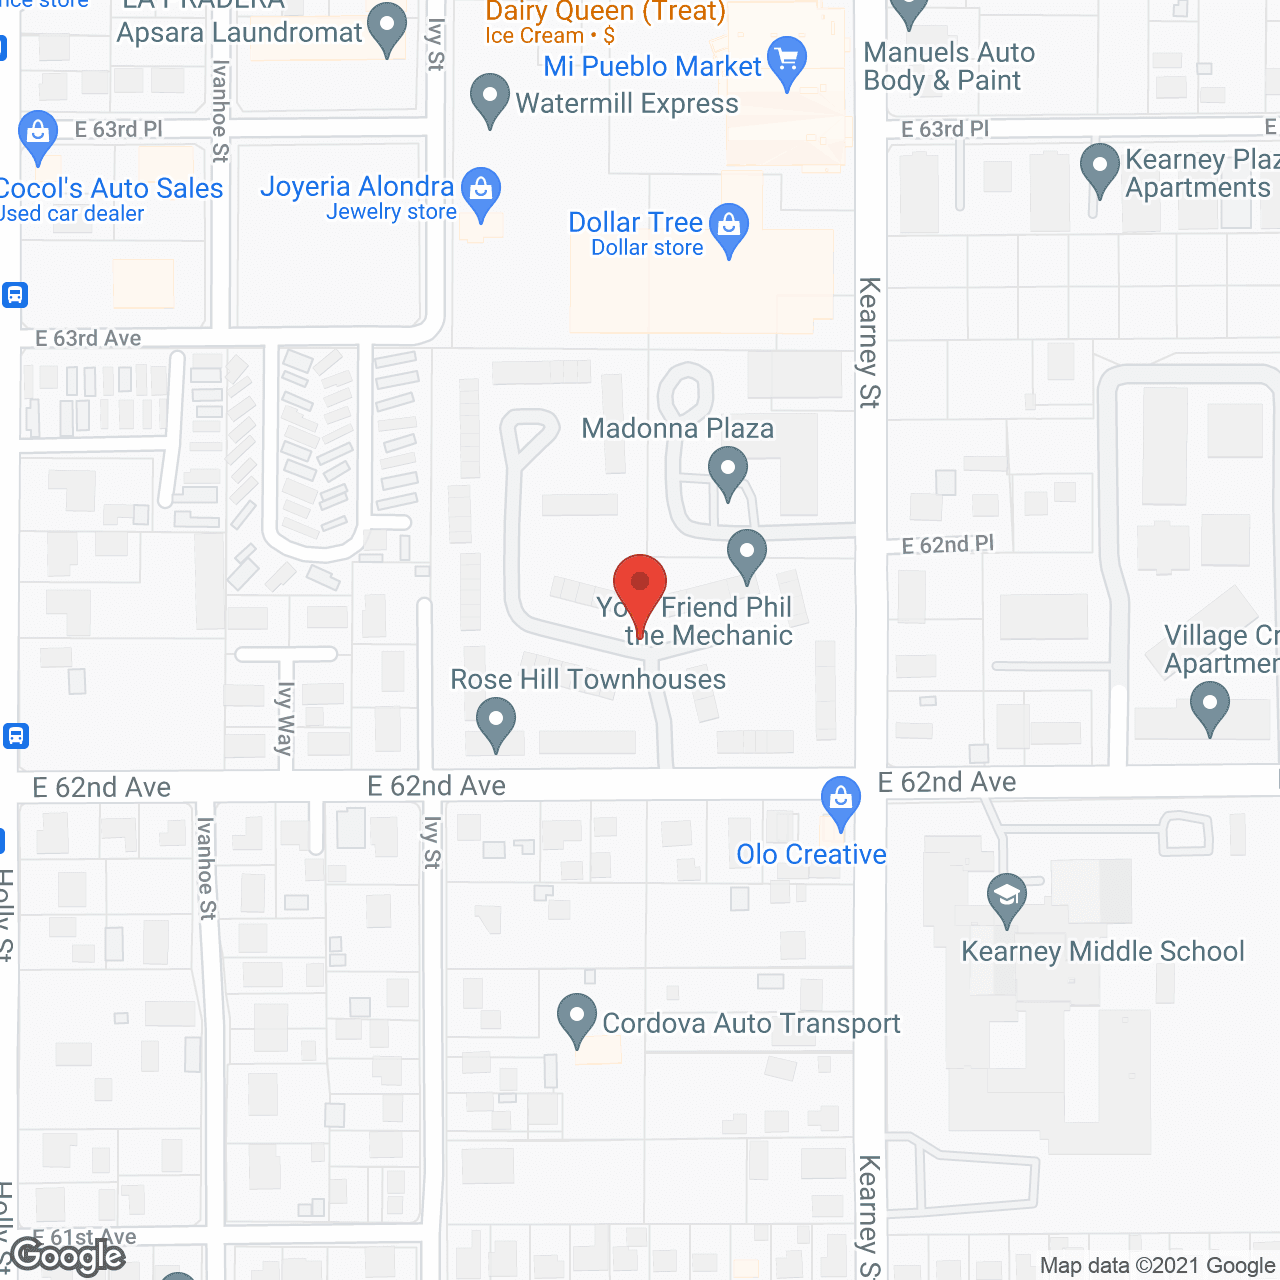 Madonna Plaza in google map